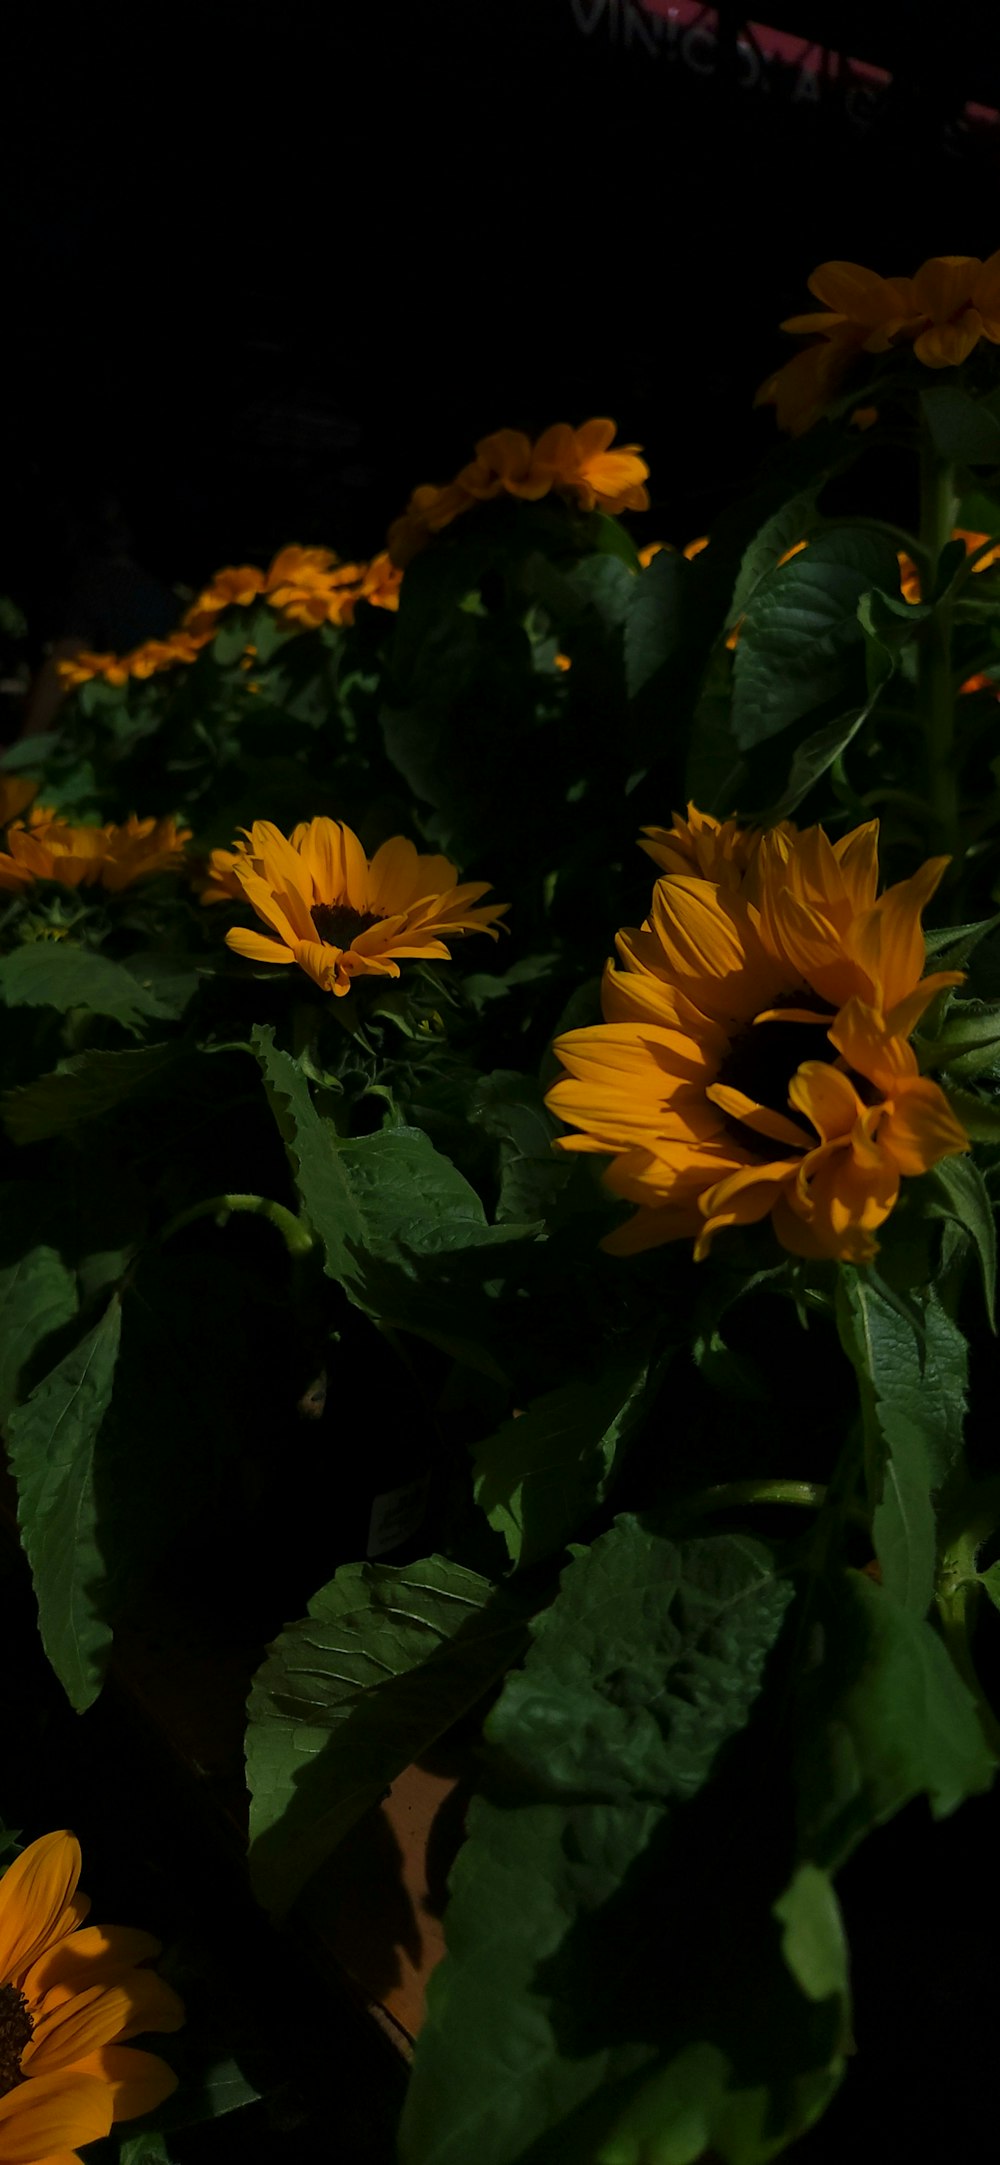 Un grupo de flores amarillas